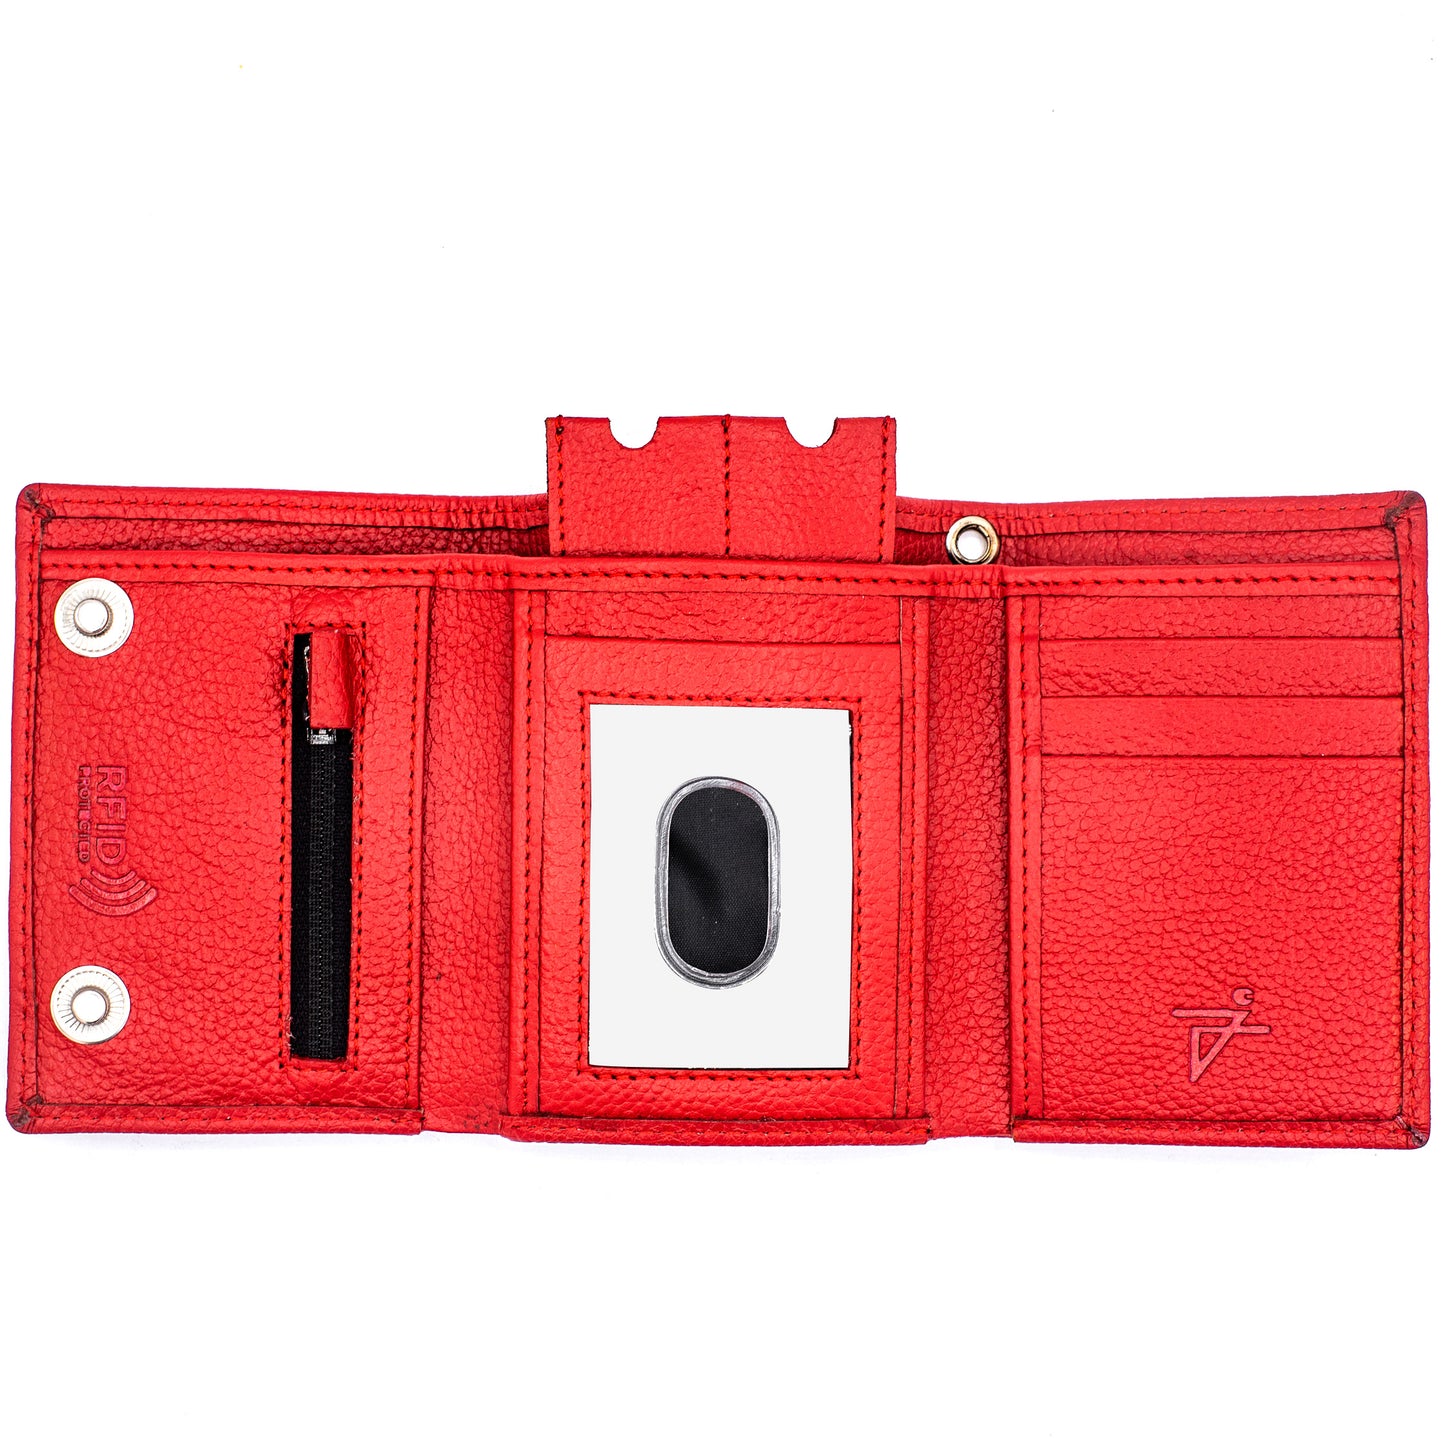 Trifold RFID Safe Leather Red Eye-Let Hole Wallet for Men With Key Holder And Zipper Pocket Inside